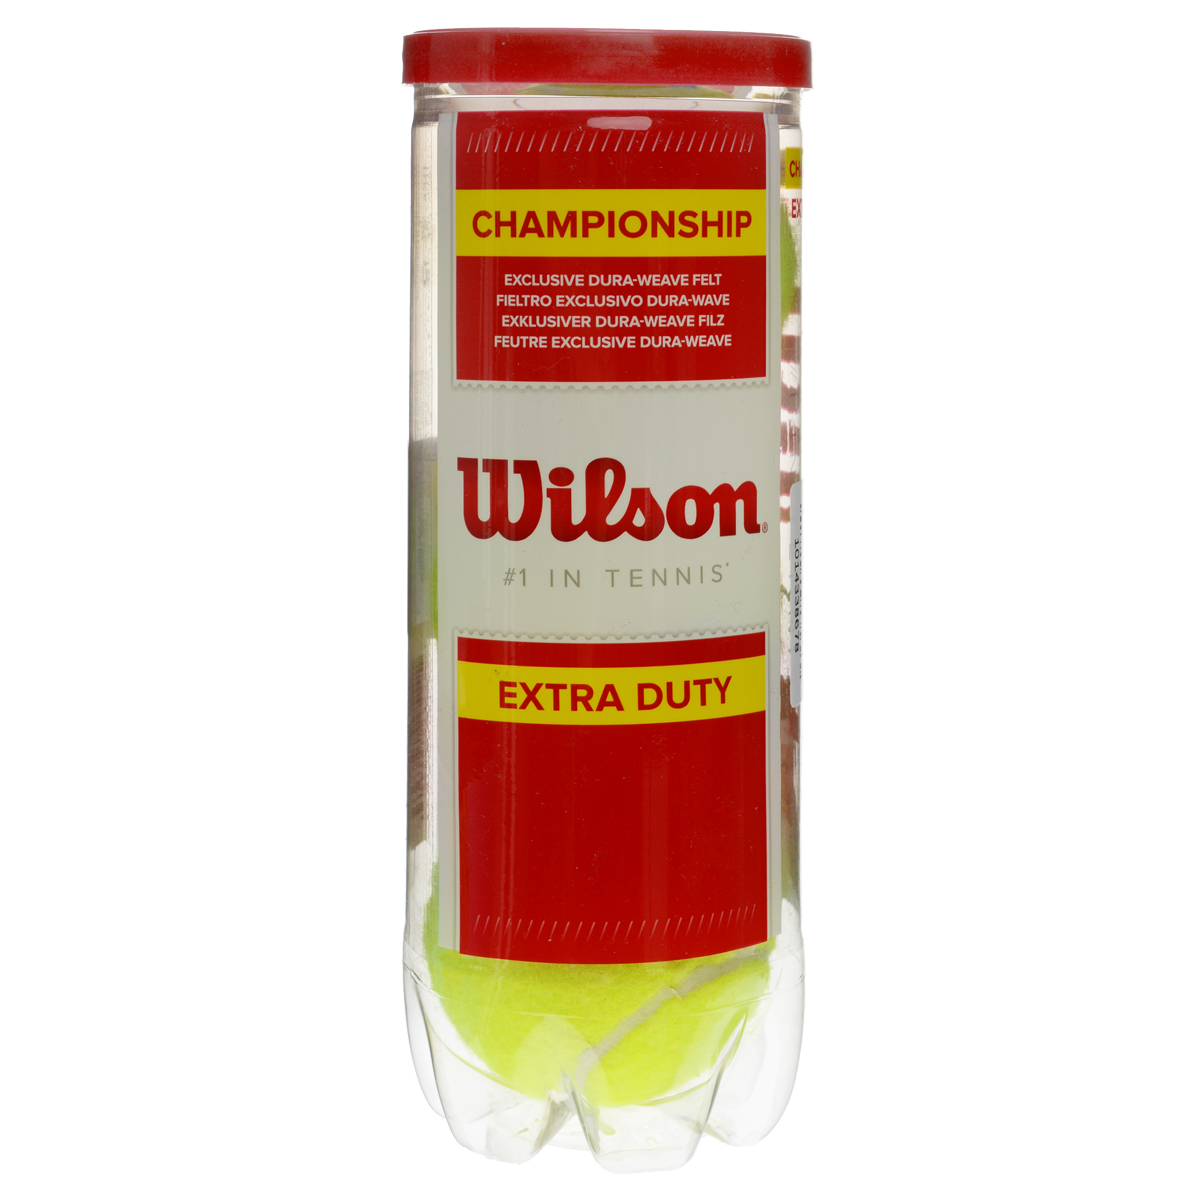  Wilson "Championship Extra Duty"   , 3 